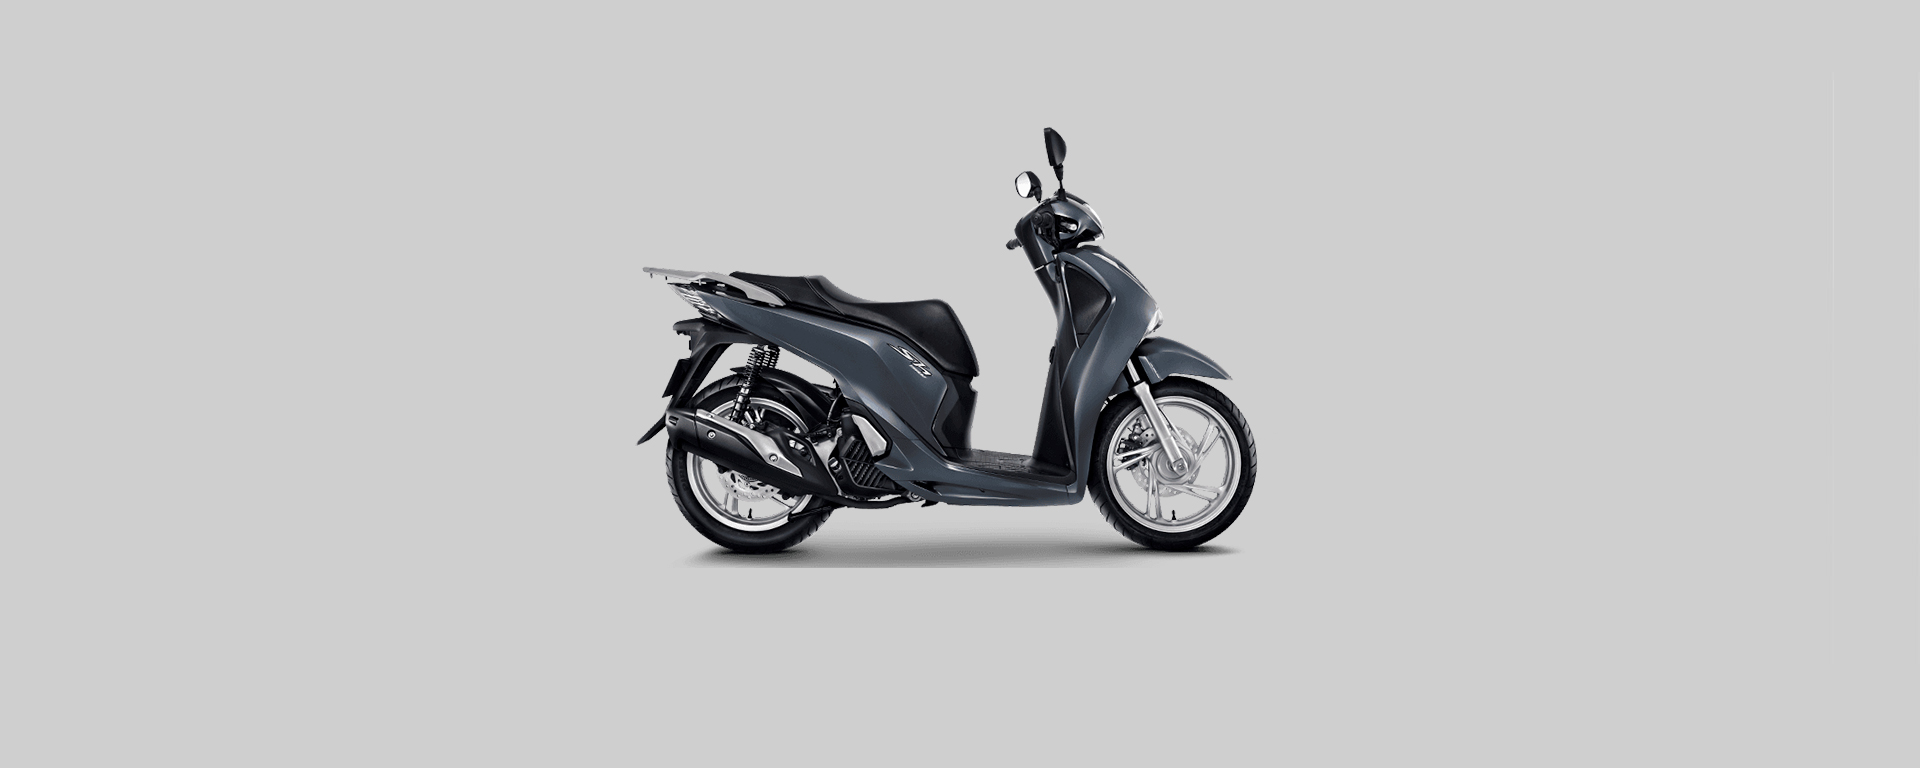 SH 150i - Levesa Motos Honda